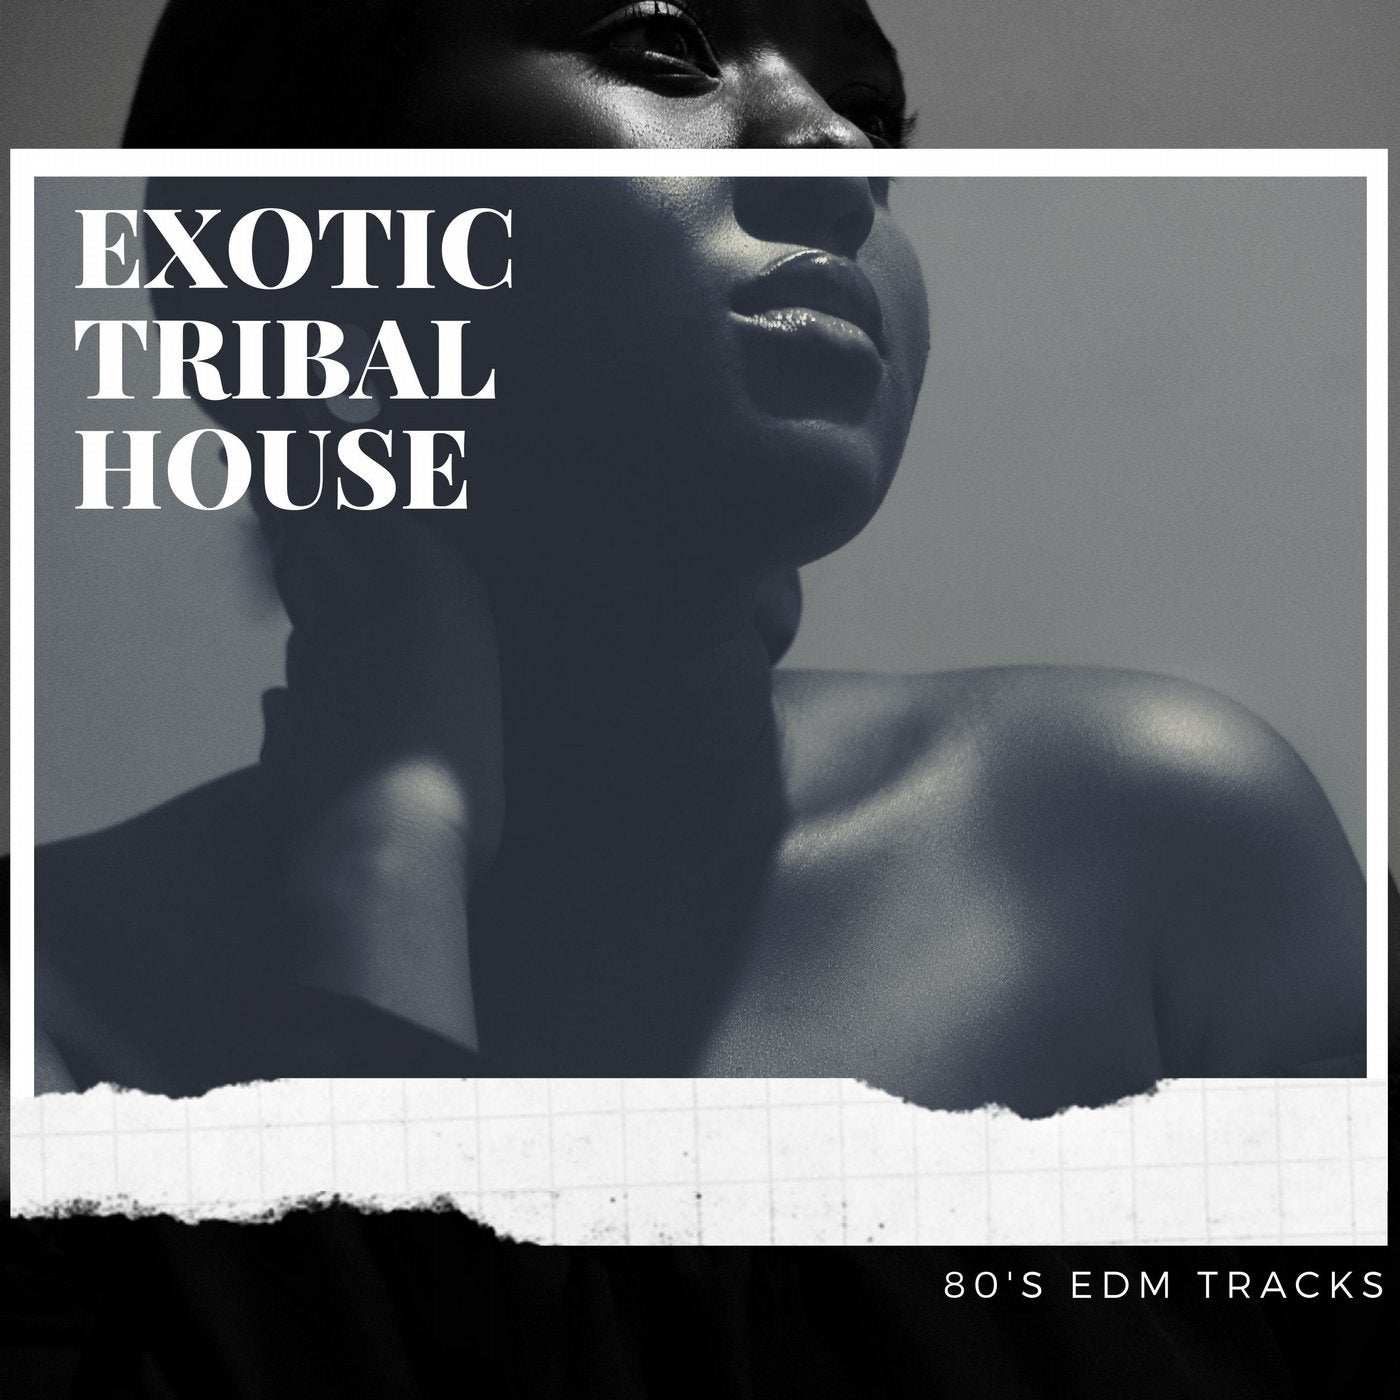 Exotic Tribal House - 80's EDM Tracks